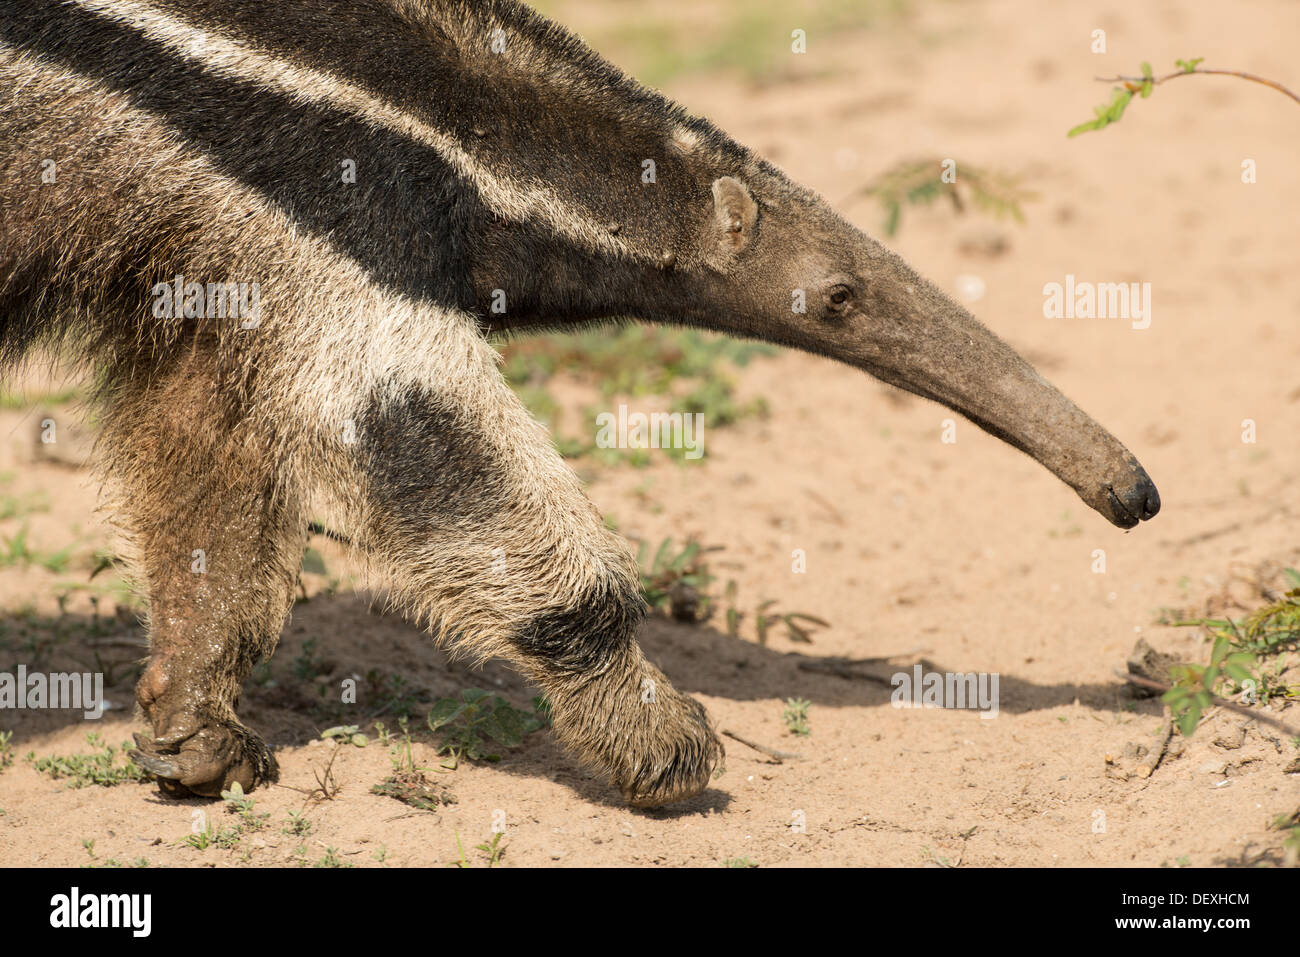 Stock photo closeup immagine di un gigante anteater, Pantanal, Brasile. Foto Stock